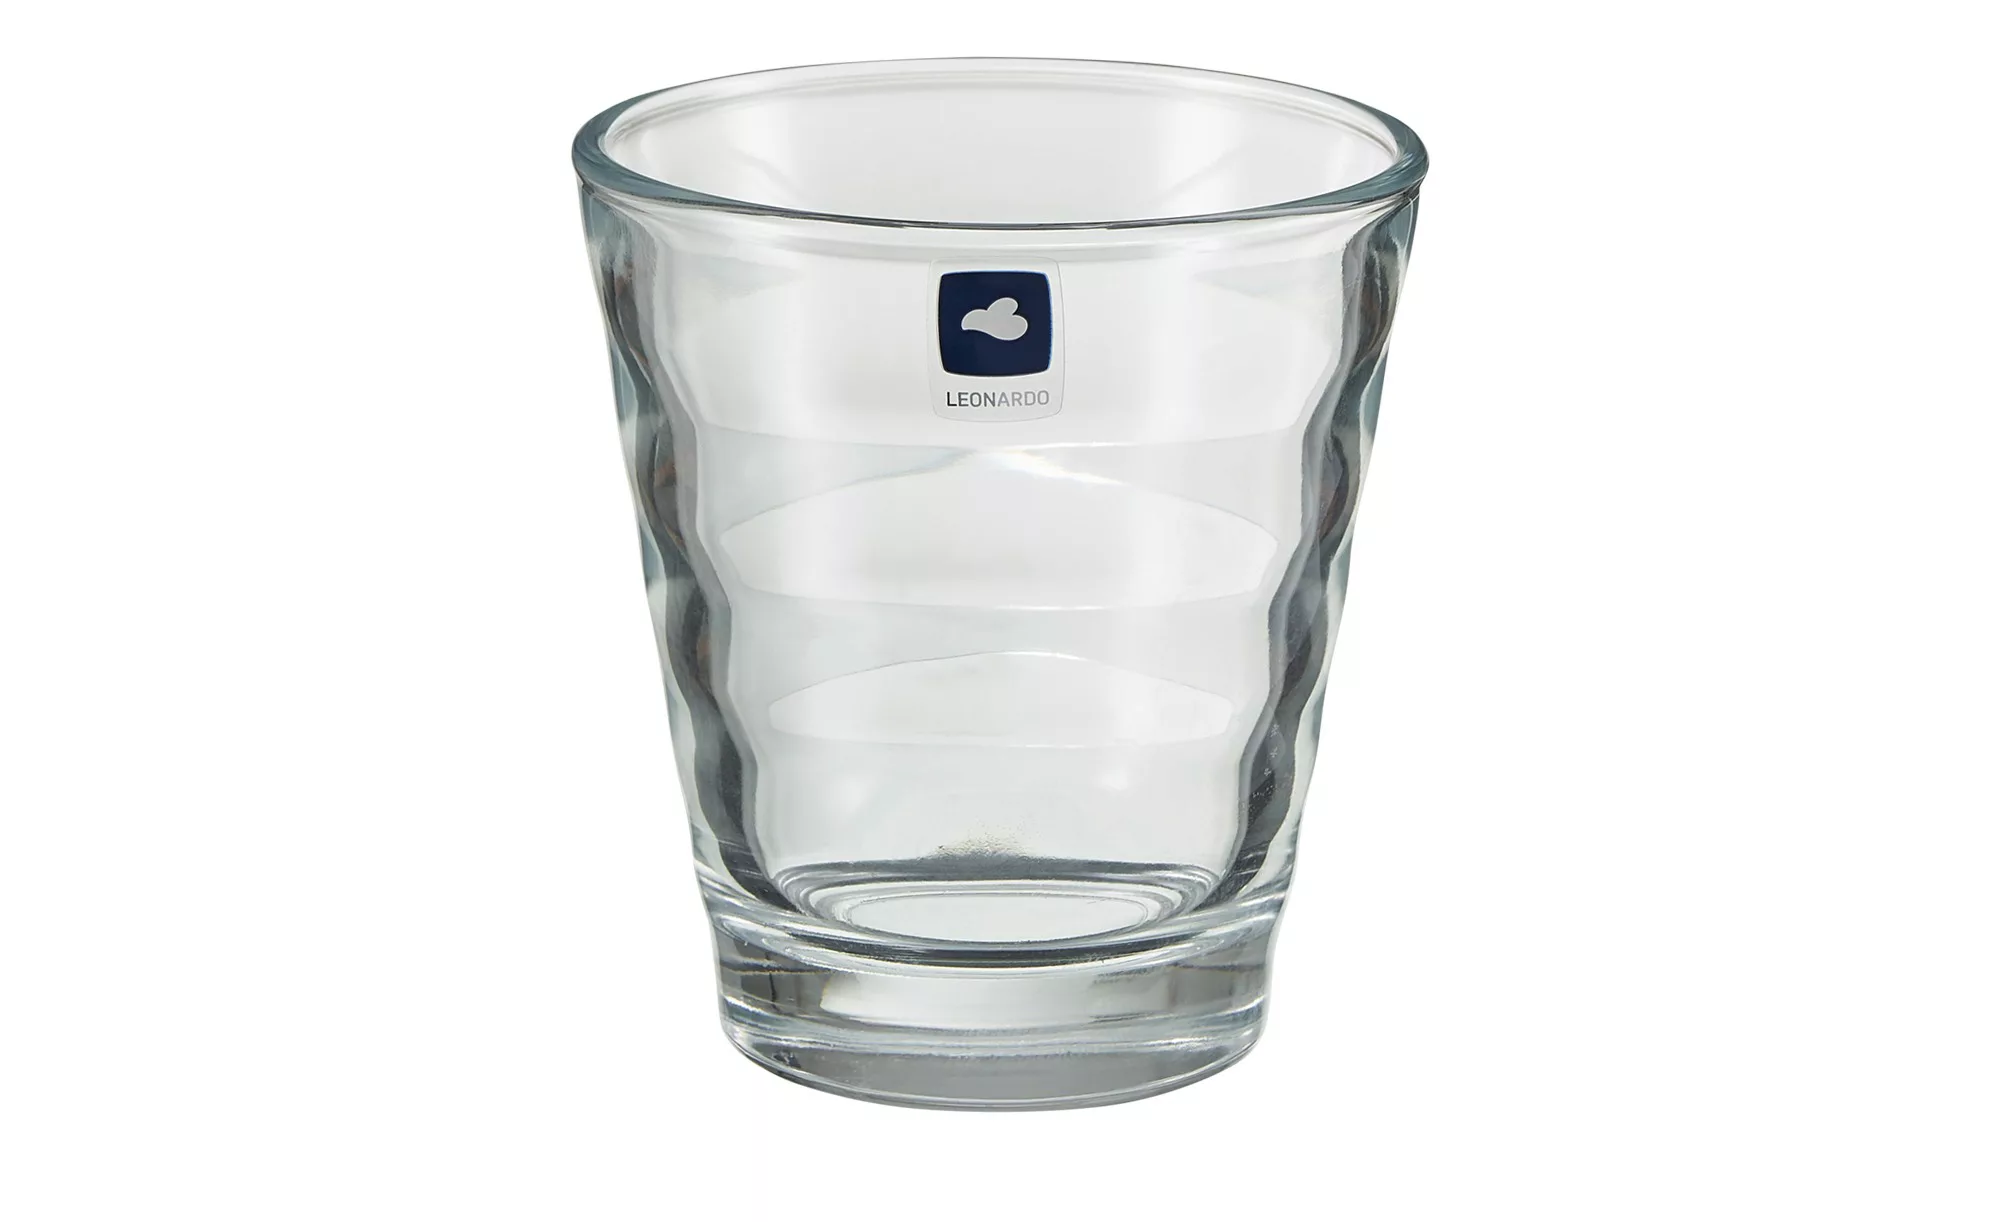 LEONARDO Becherset, 12-teilig  Onda - transparent/klar - Glas - Sconto günstig online kaufen